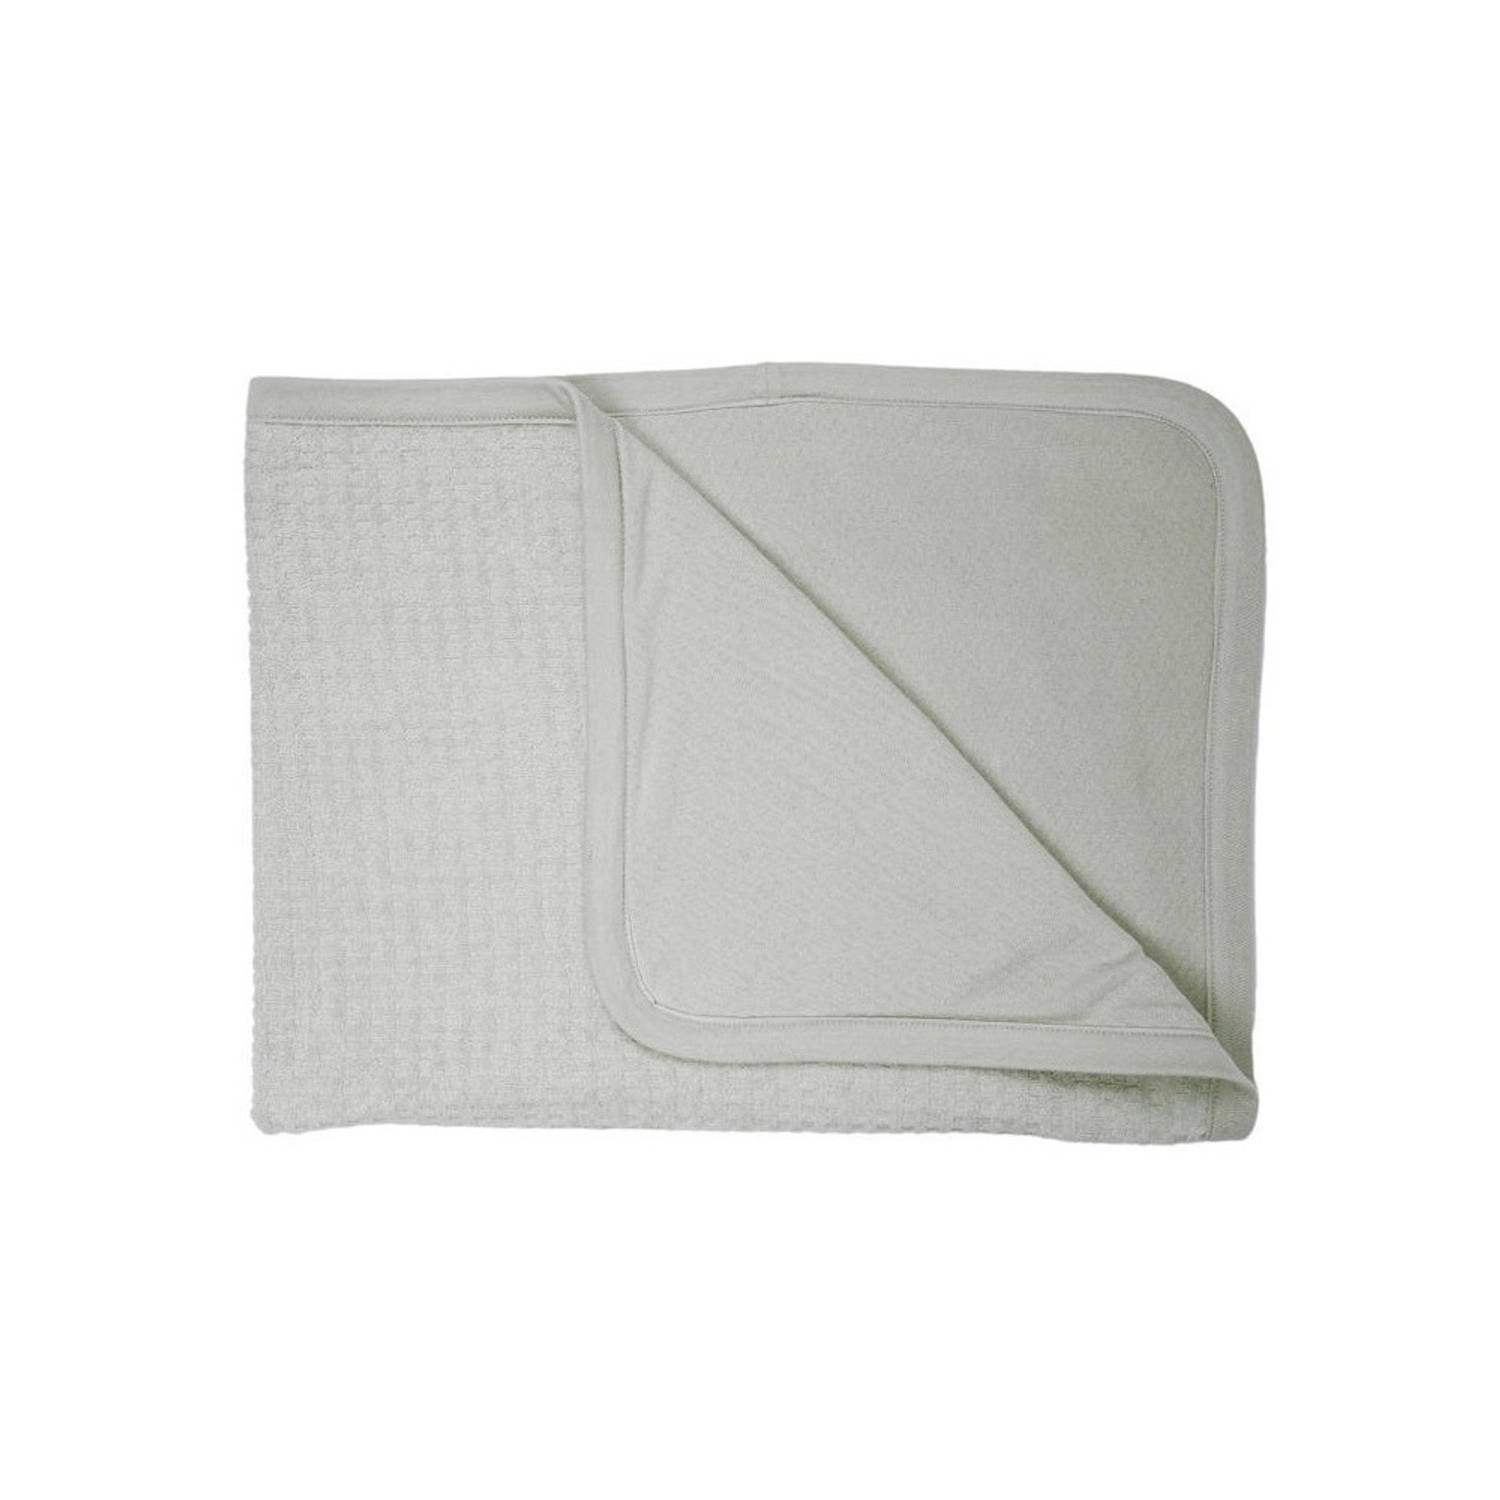 Snoozebaby blanket cot T.O.G. 2.0 Mystic Mint - 100x150cm